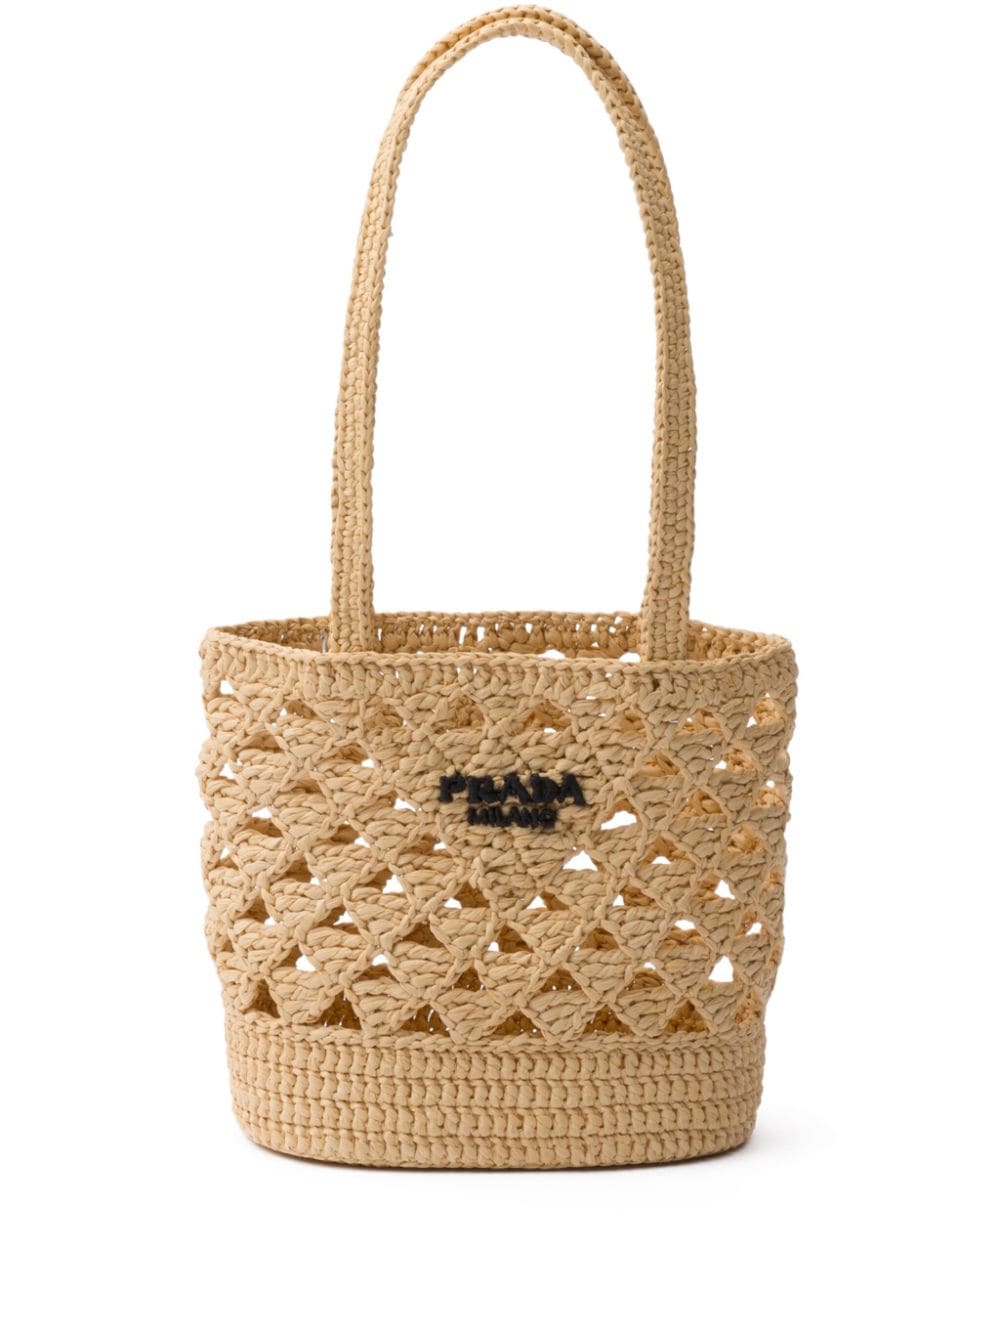 Prada Women's Small Woven Fabric Crochet Shoulder Bag In F0018 Naturale